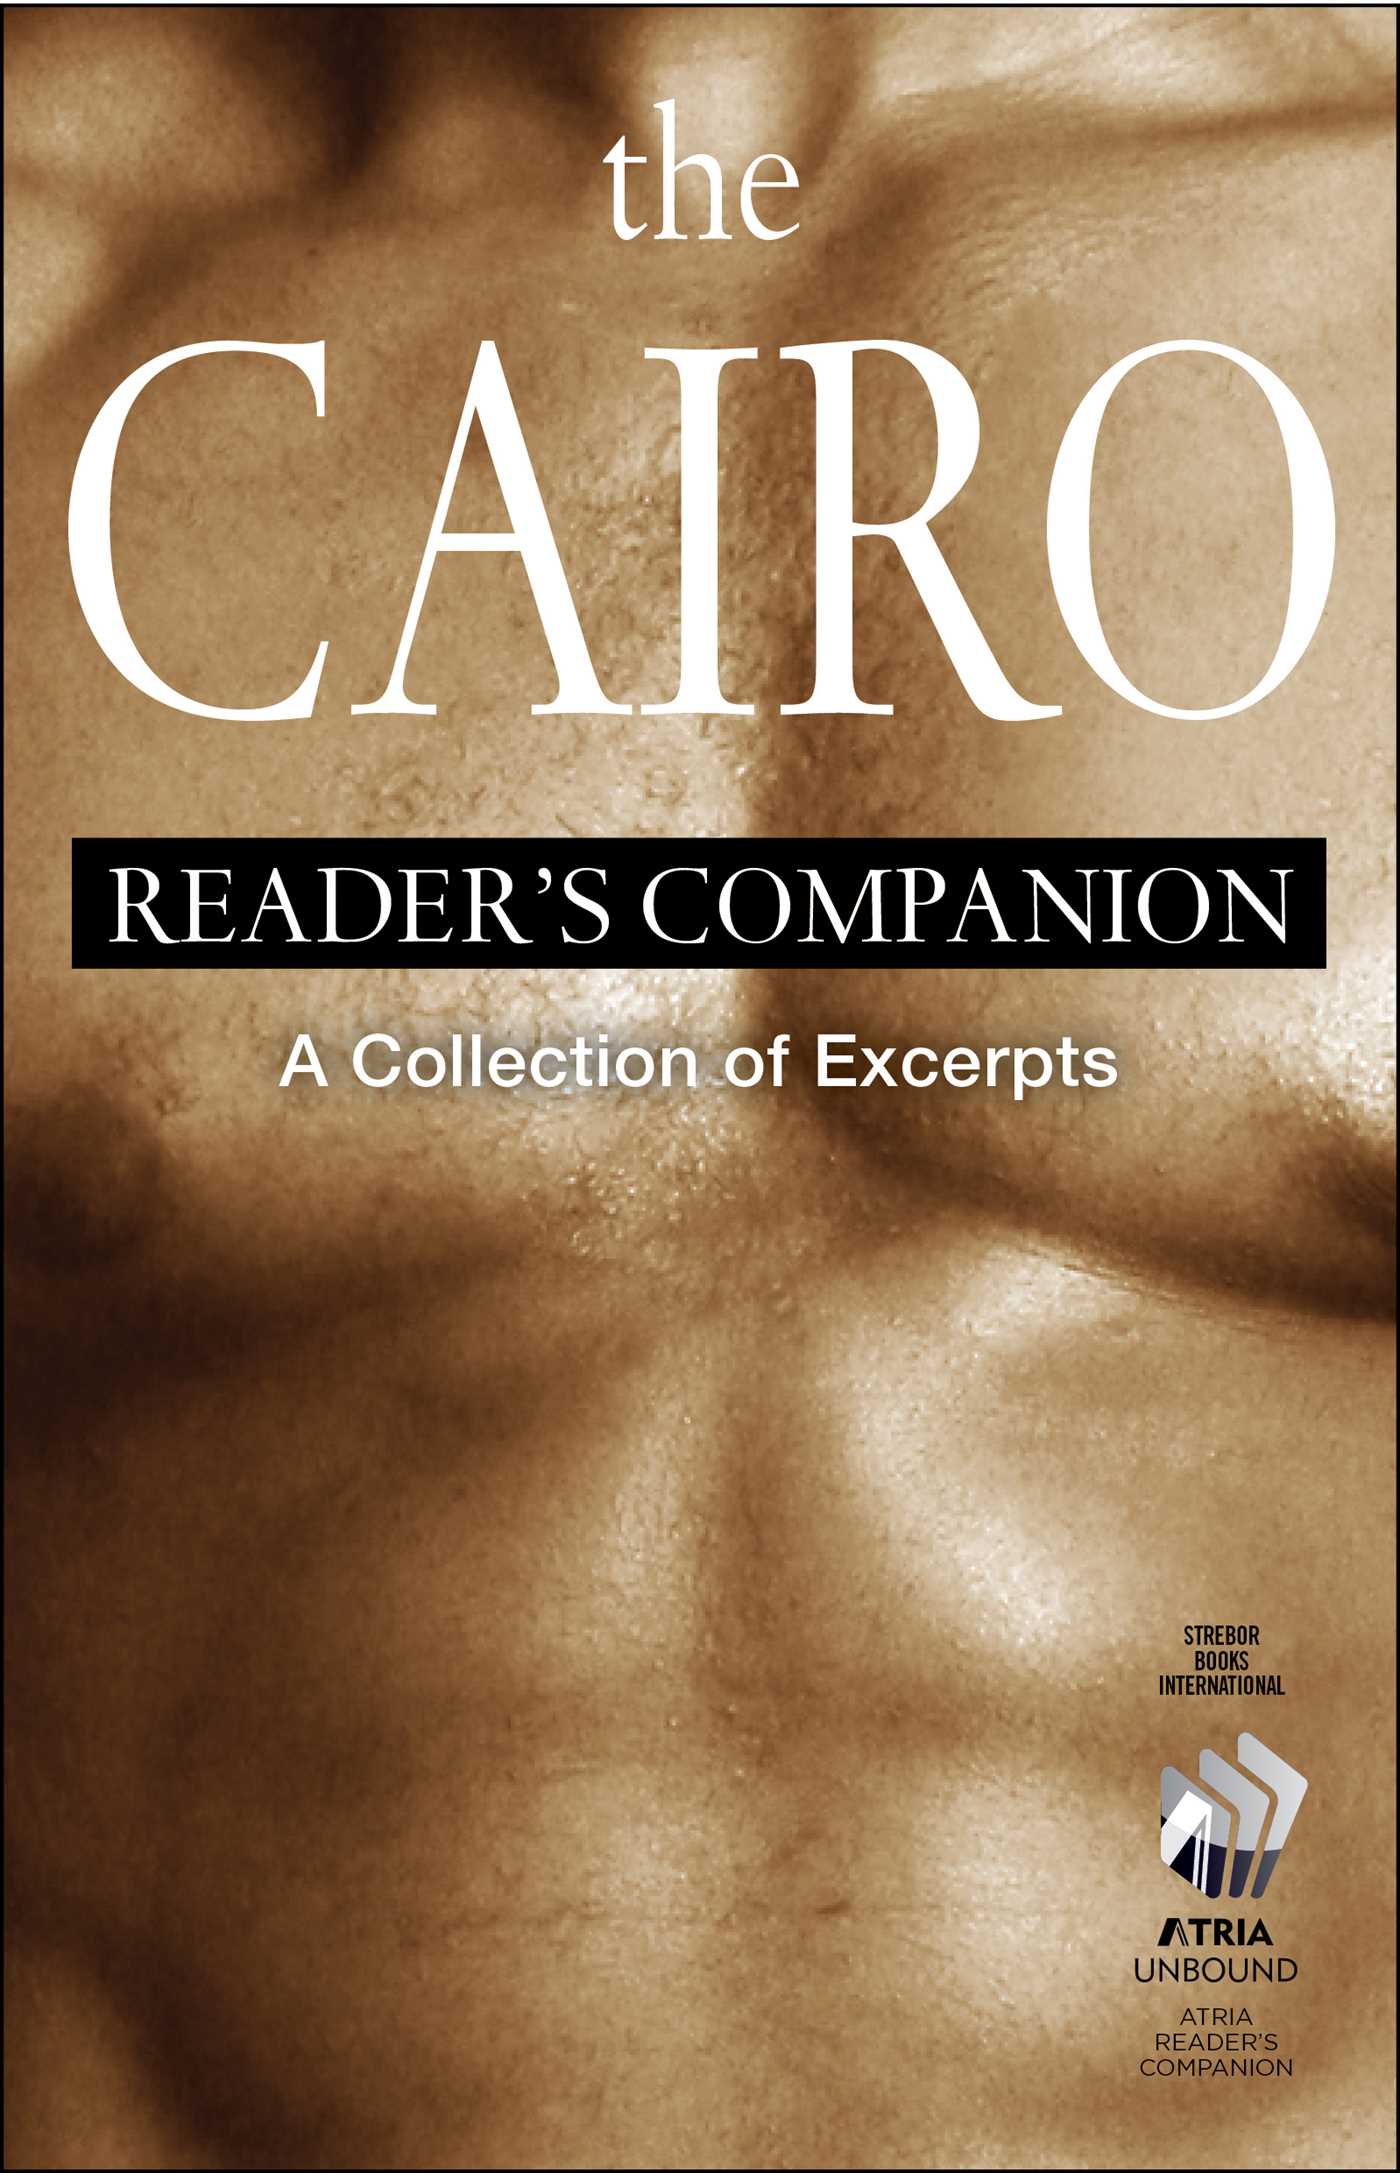 Cairo Reader's Companion